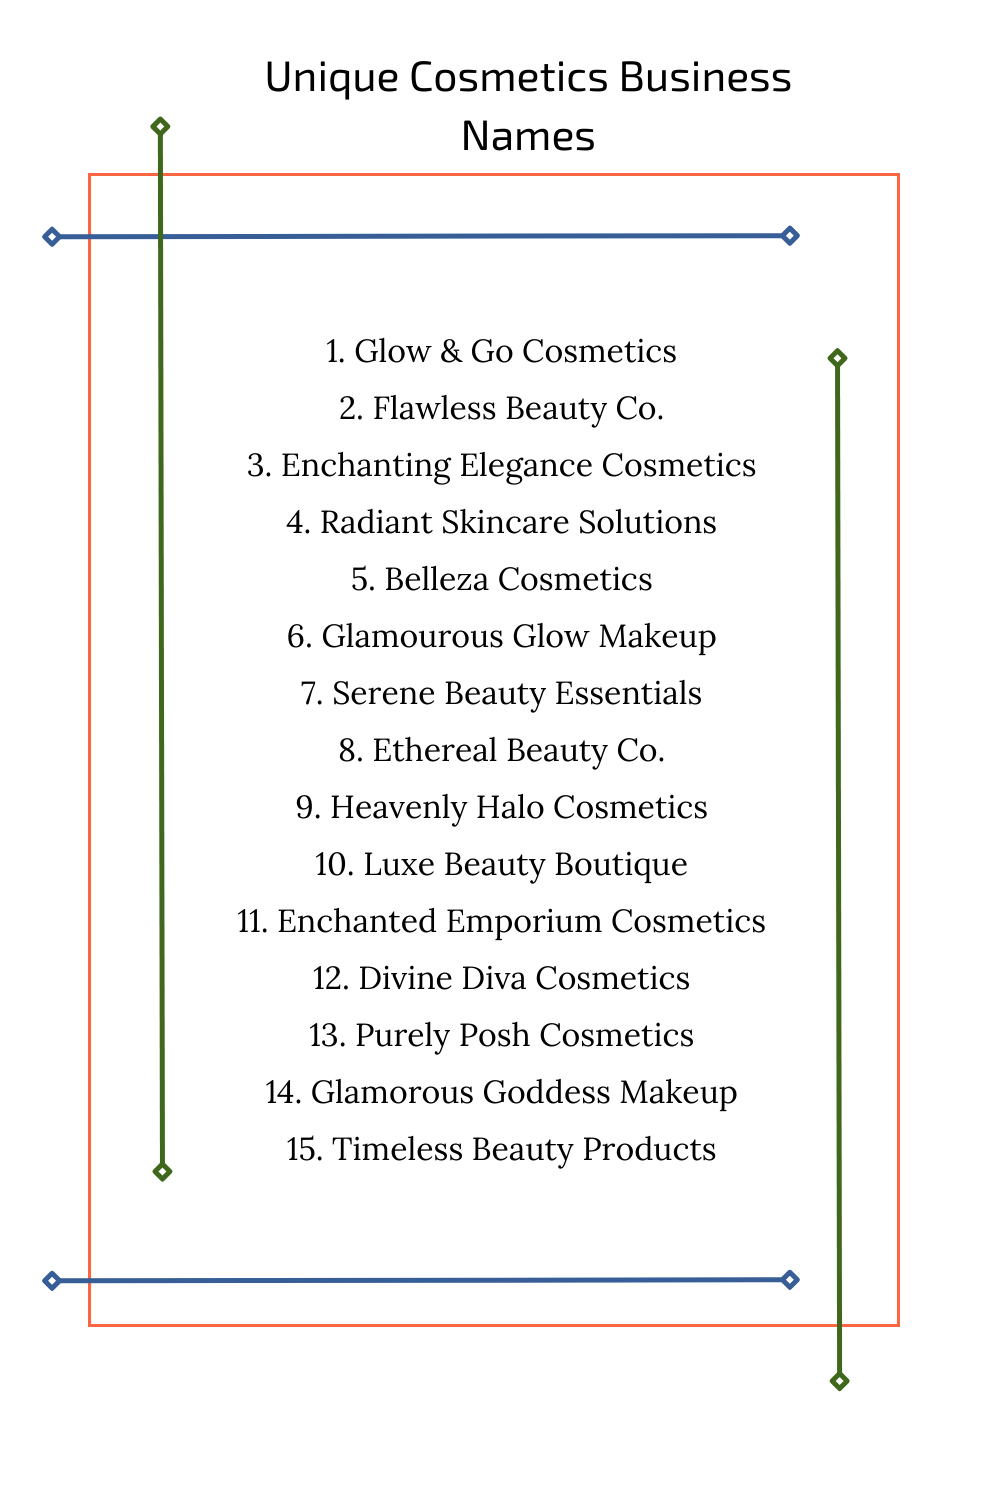 Unique Cosmetics Business Names